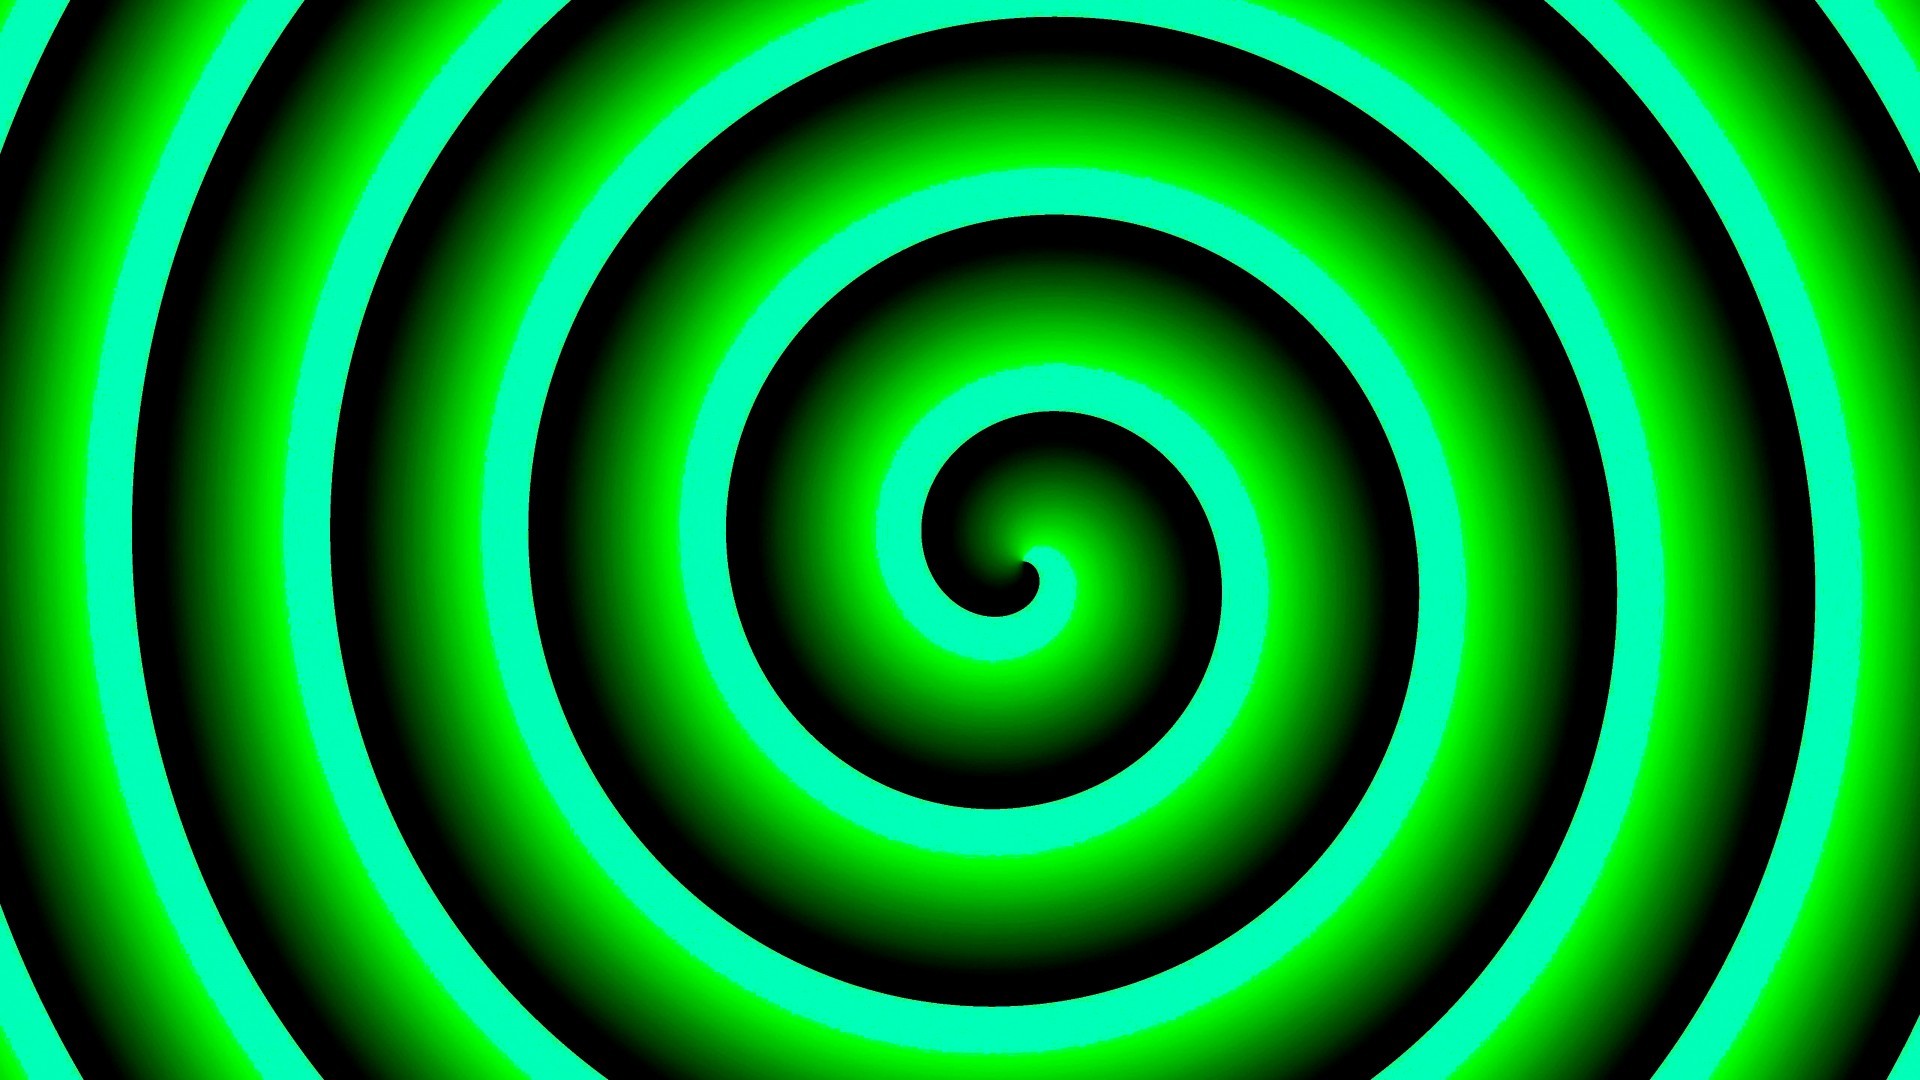 hypnotic wallpaper,green,spiral,vortex,fractal art,circle